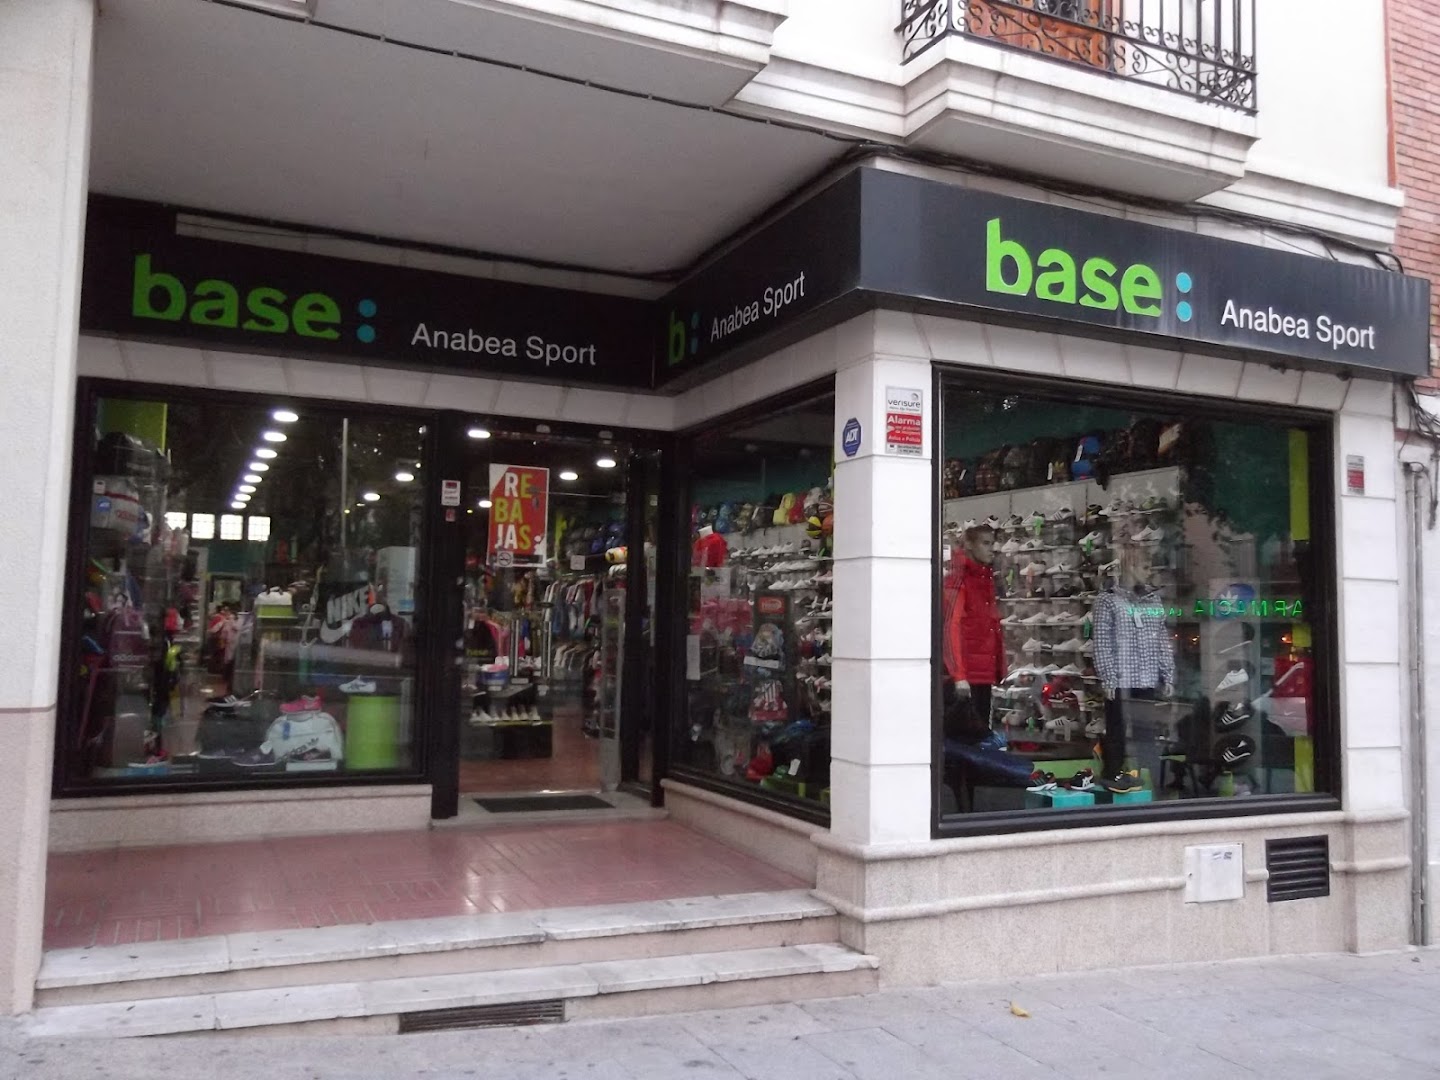 base: Anabea Sport